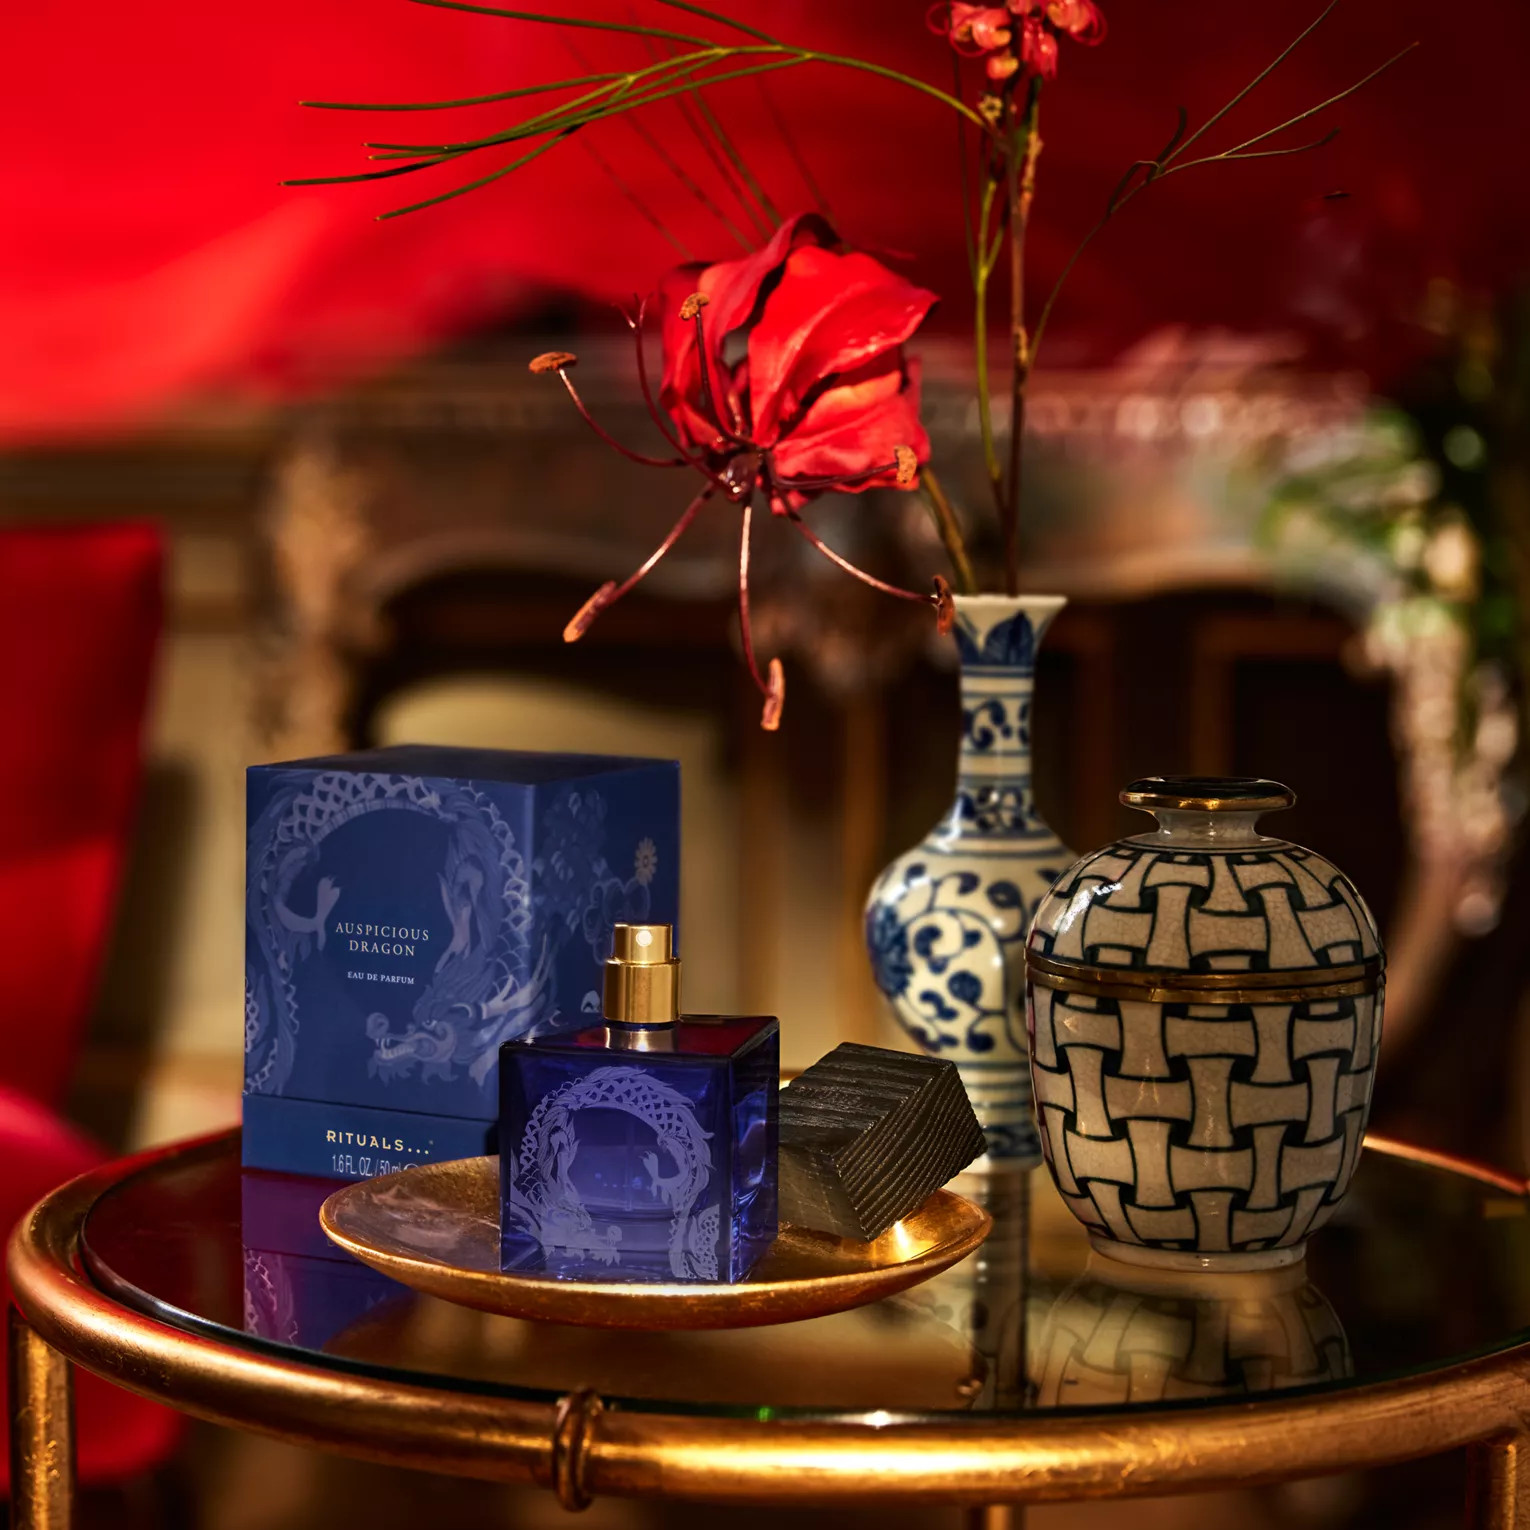 Maison: Rituals of wild fig Home Perfume